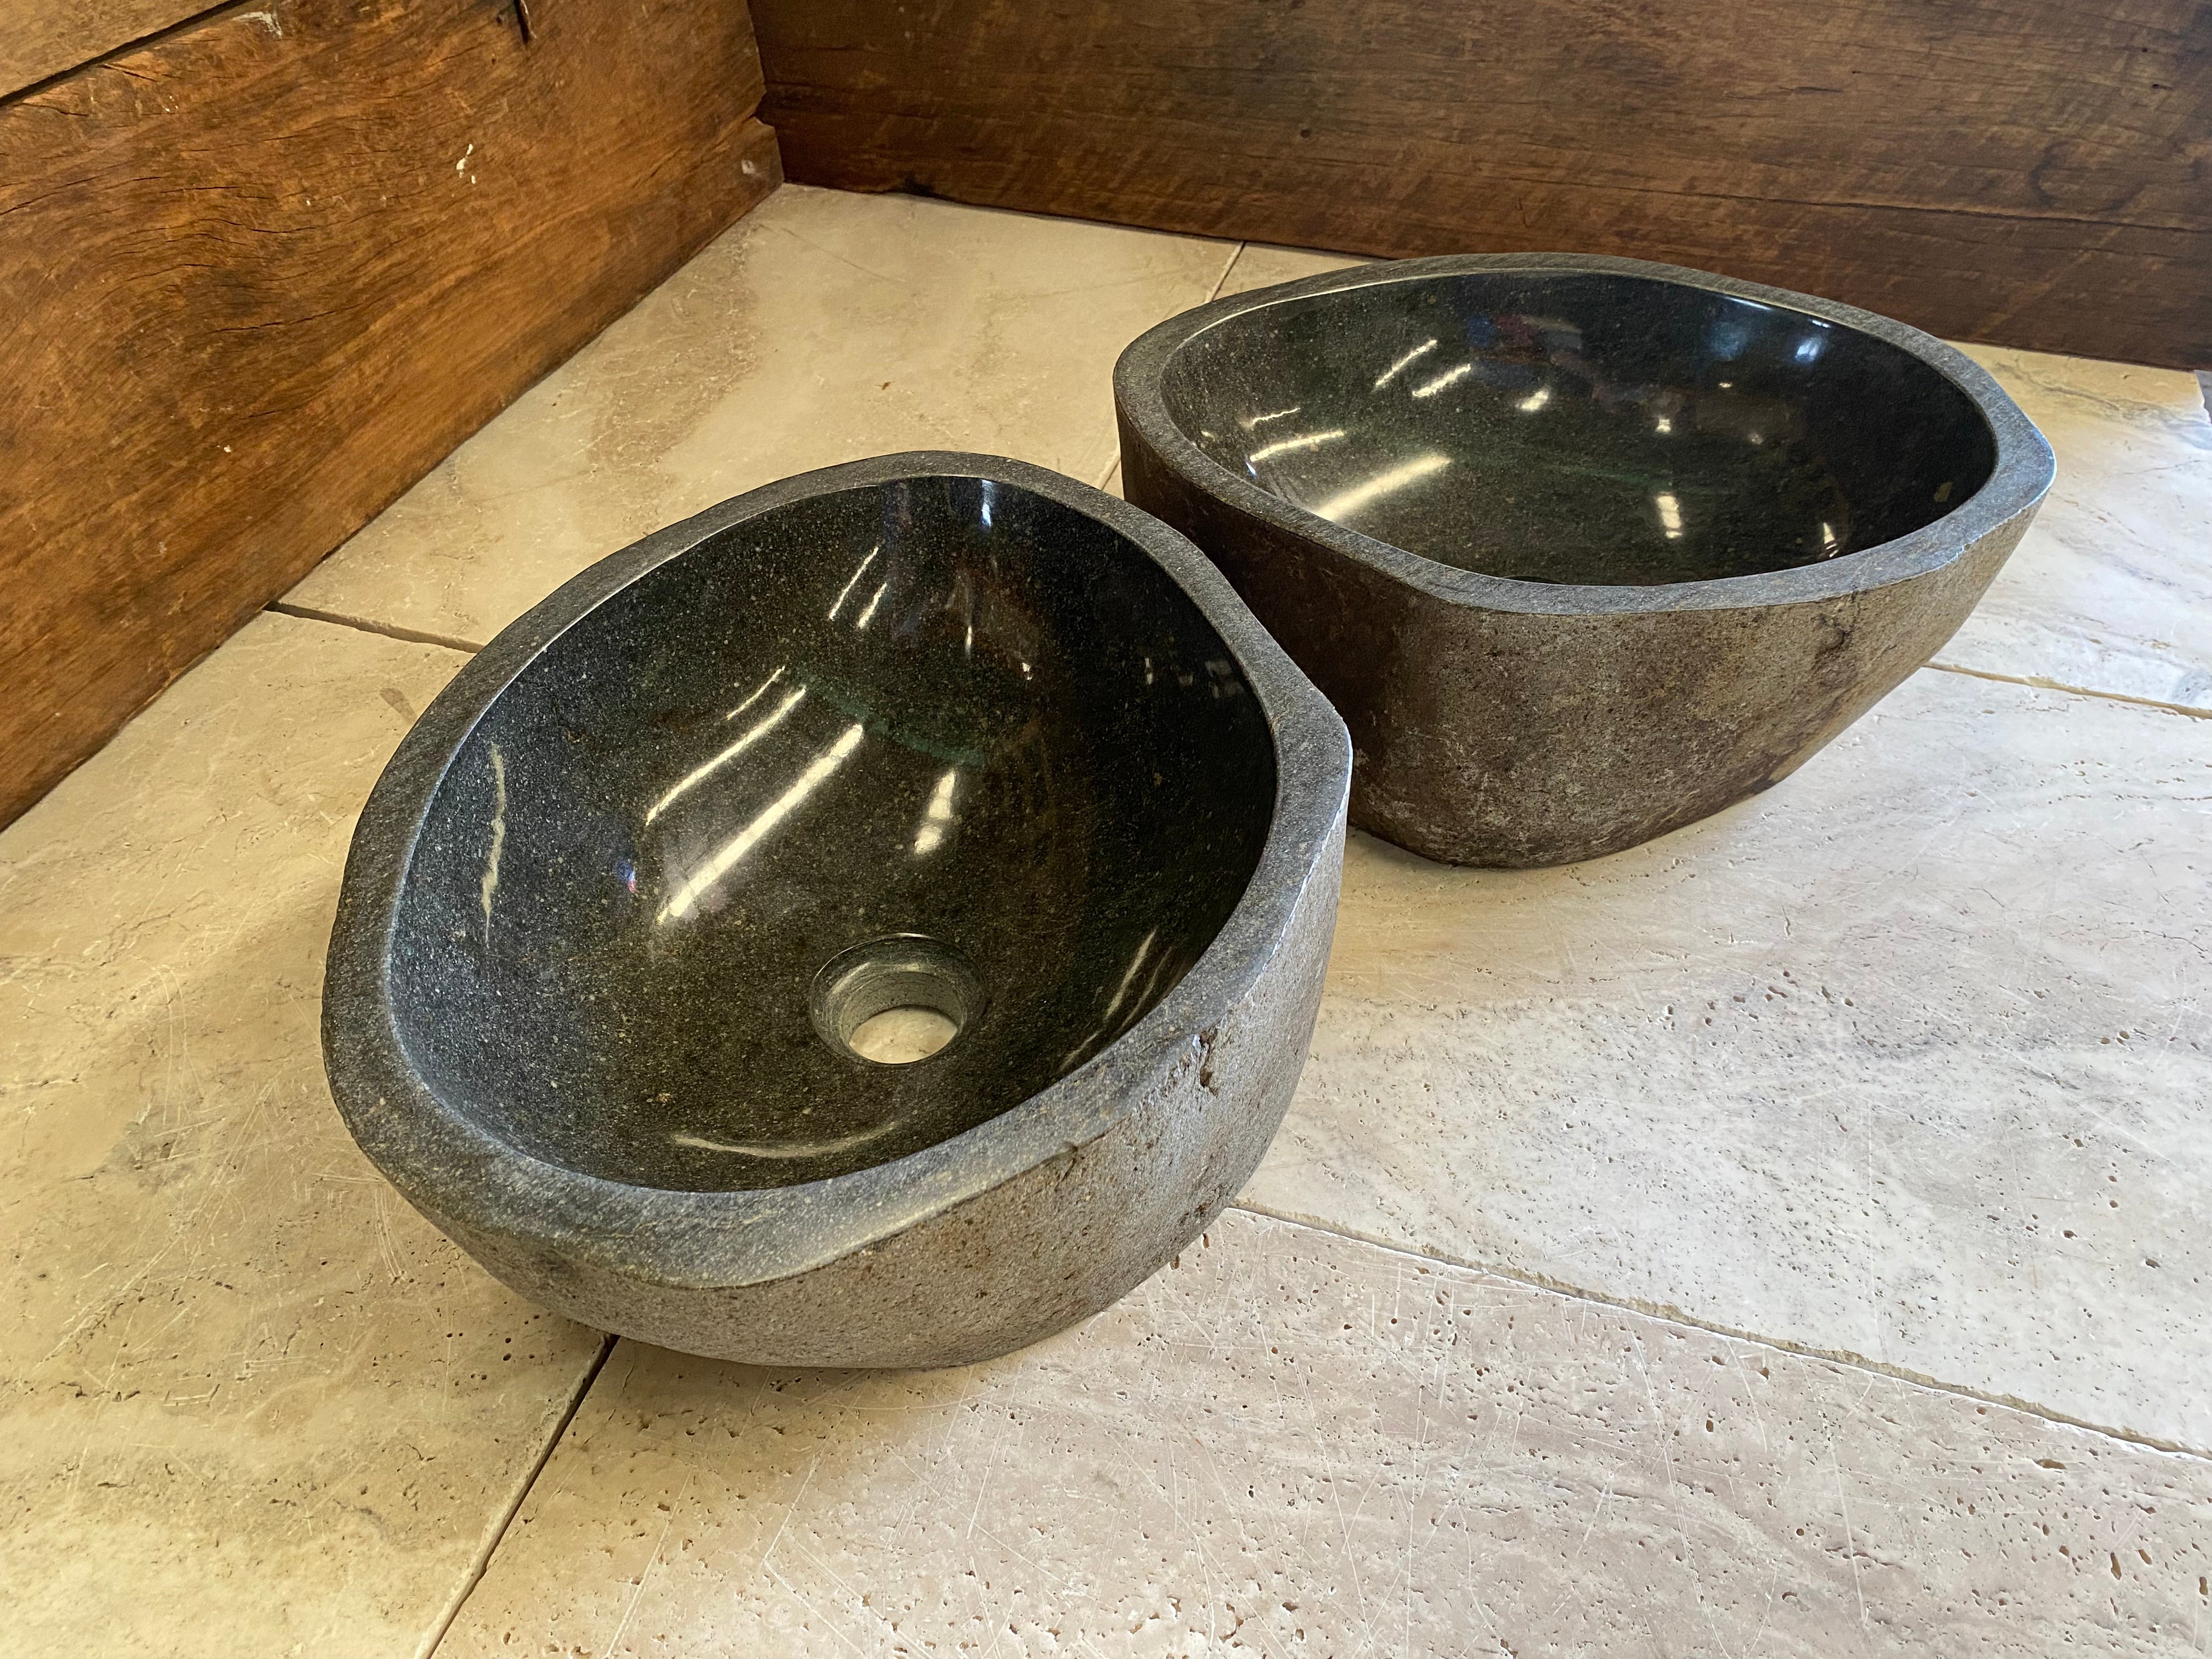 Handmade Natural Oval River Stone Bathroom Basin - Twin Set RM2306009